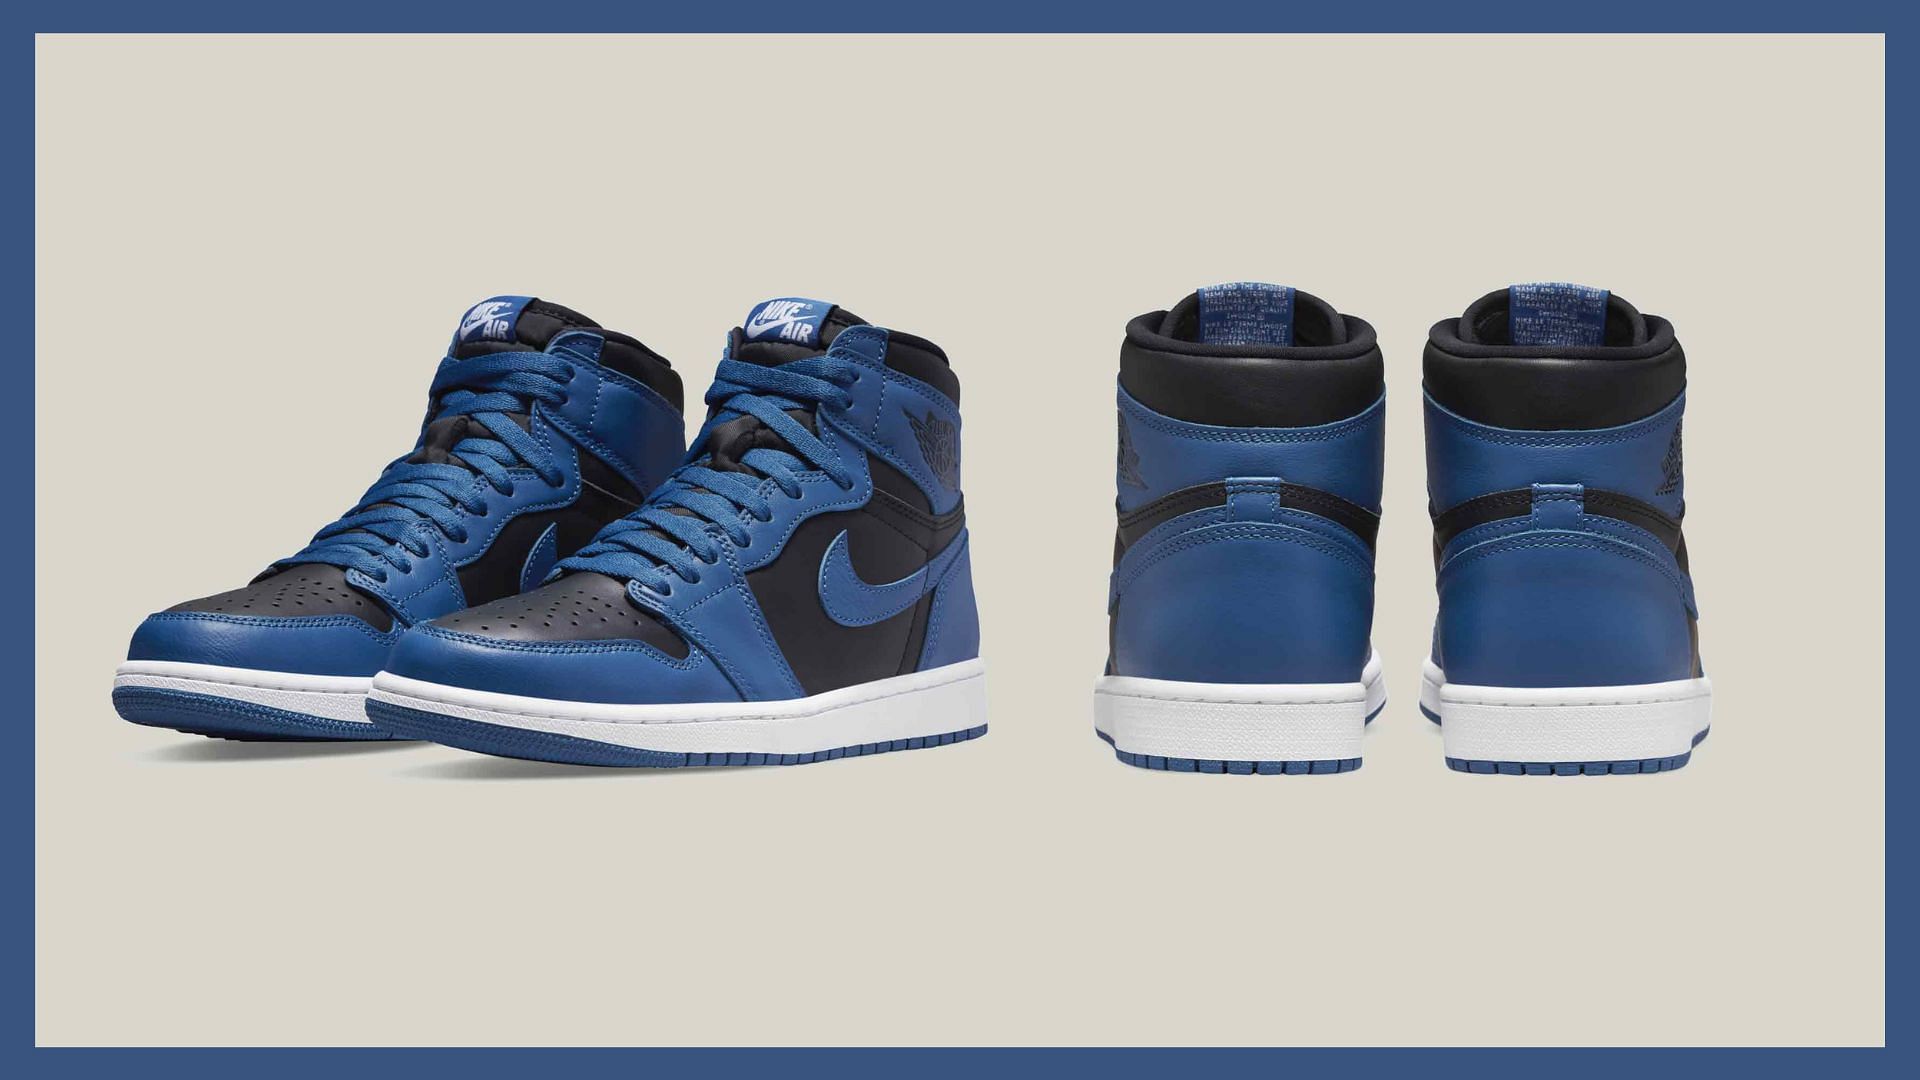 Take a closer look at the AJ1 High Dark Marina Blue (Image via Nike)